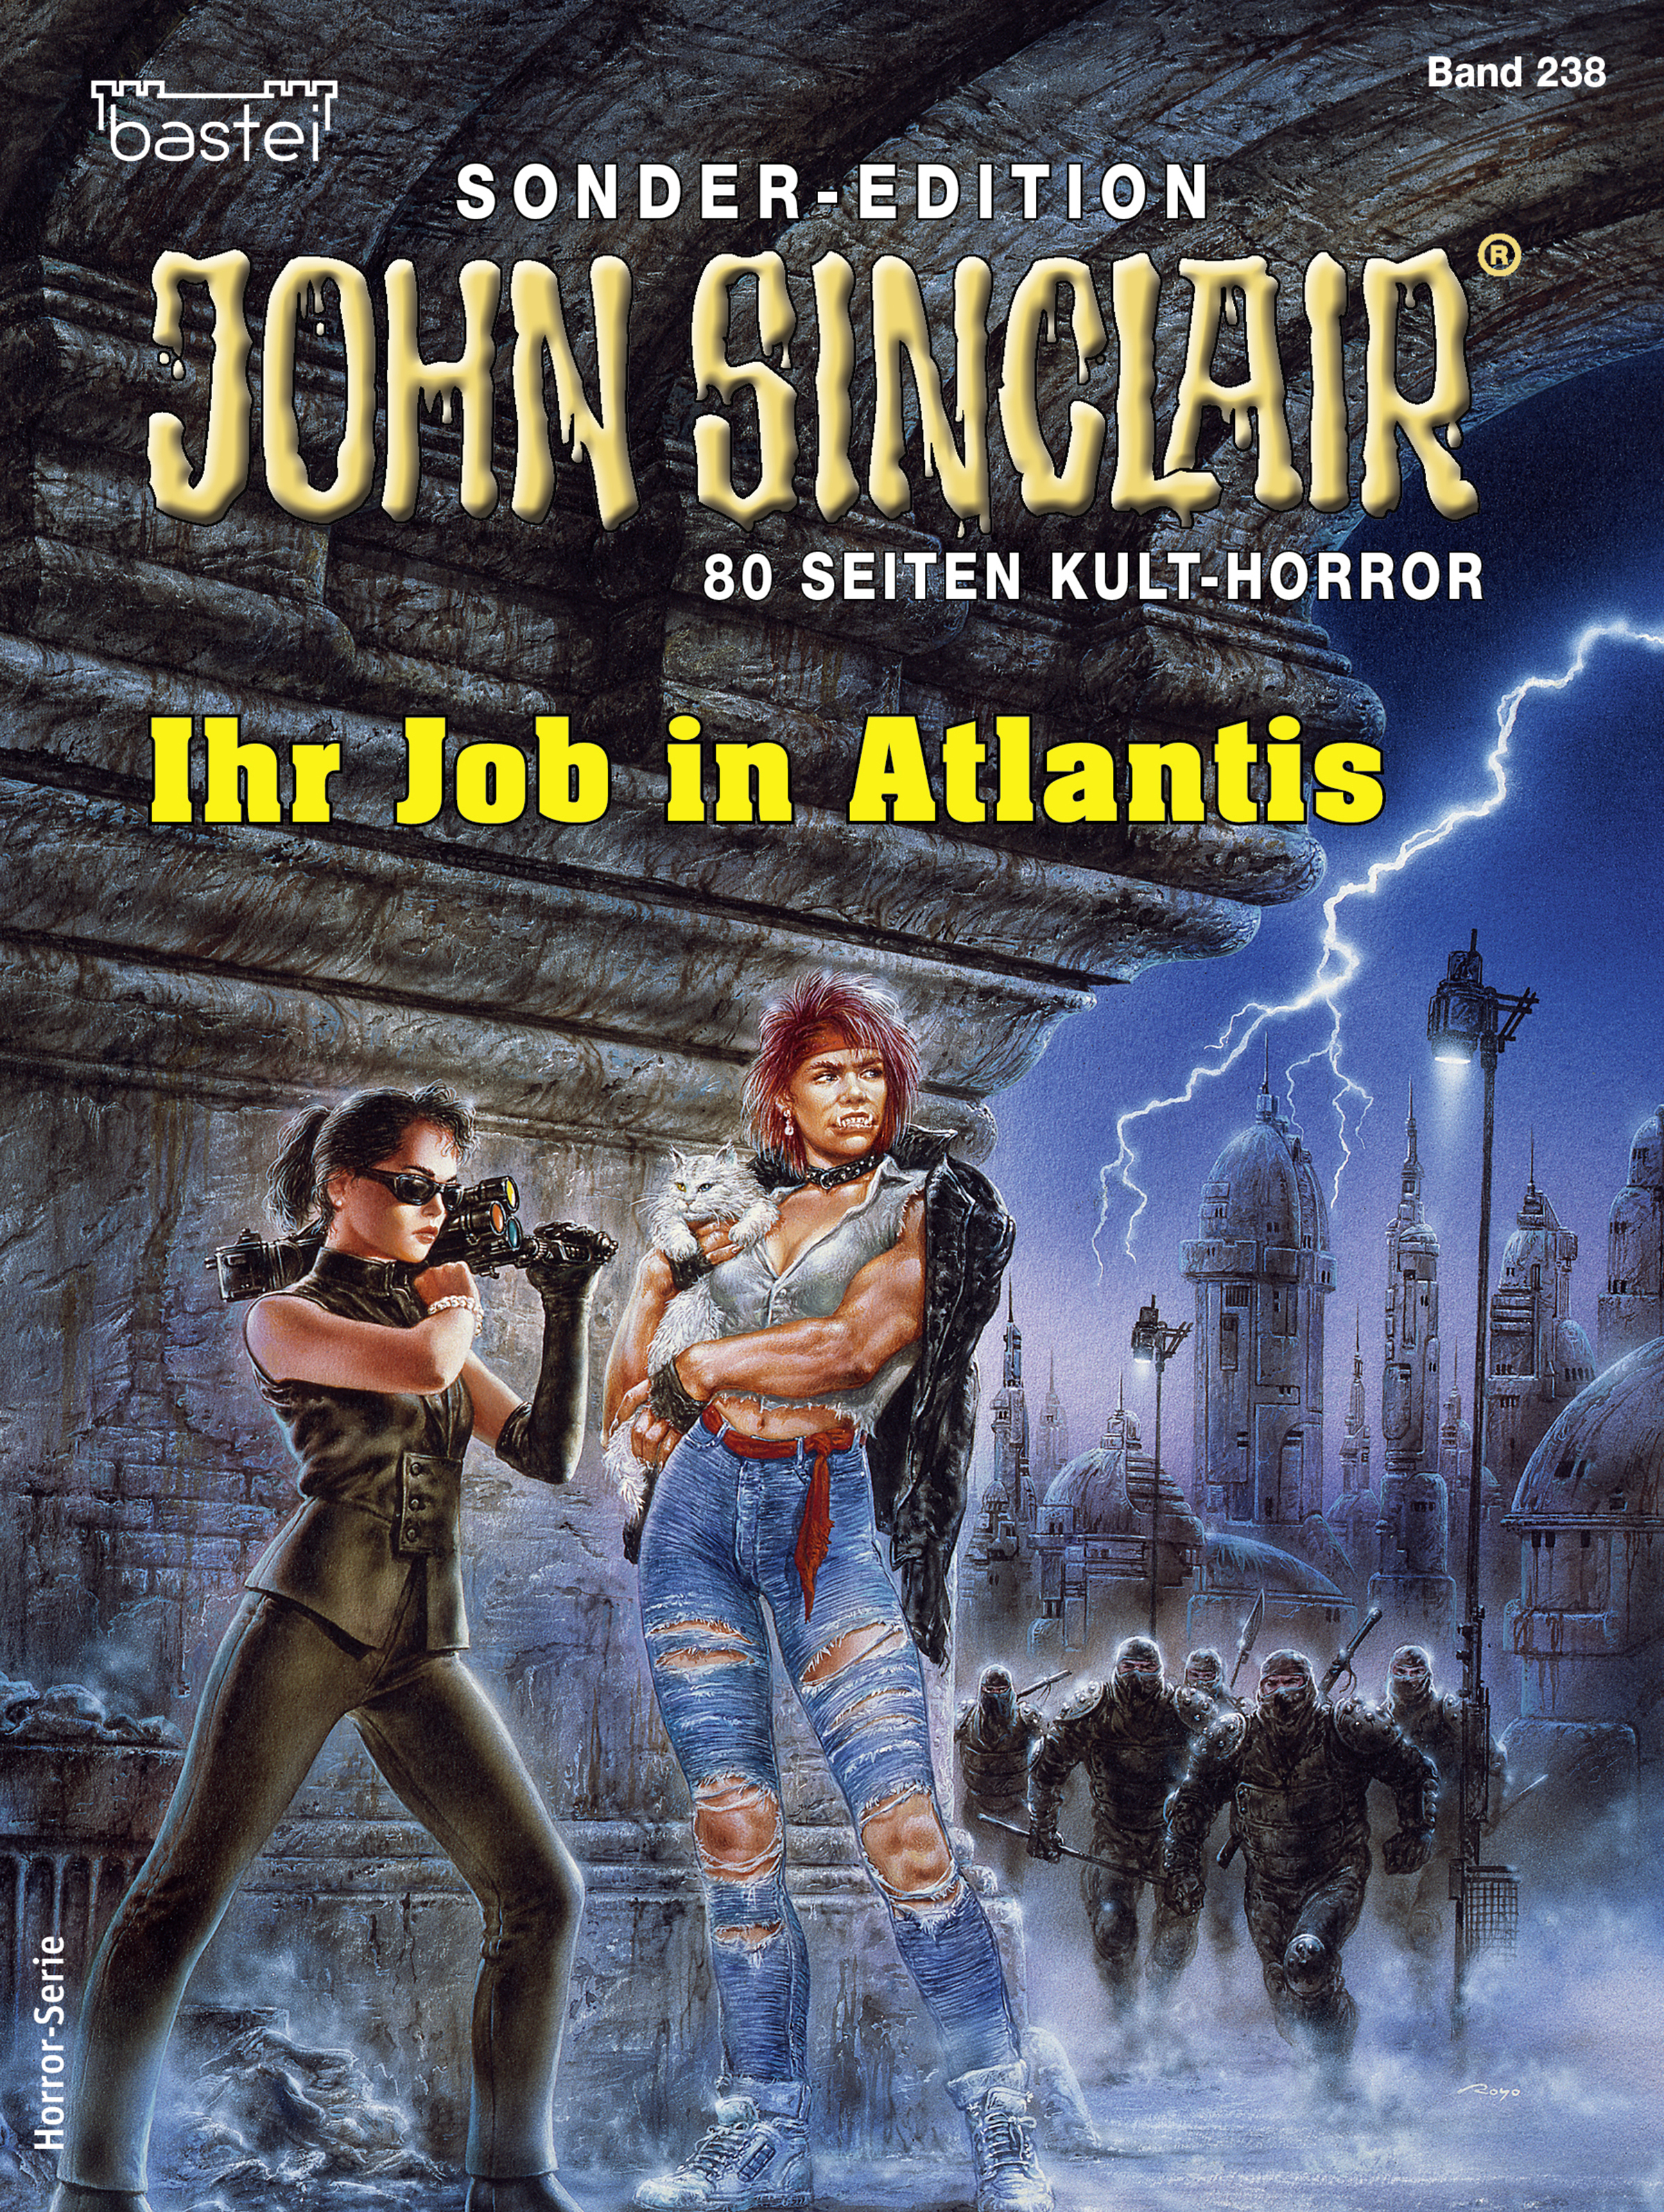 John Sinclair Sonder-Edition